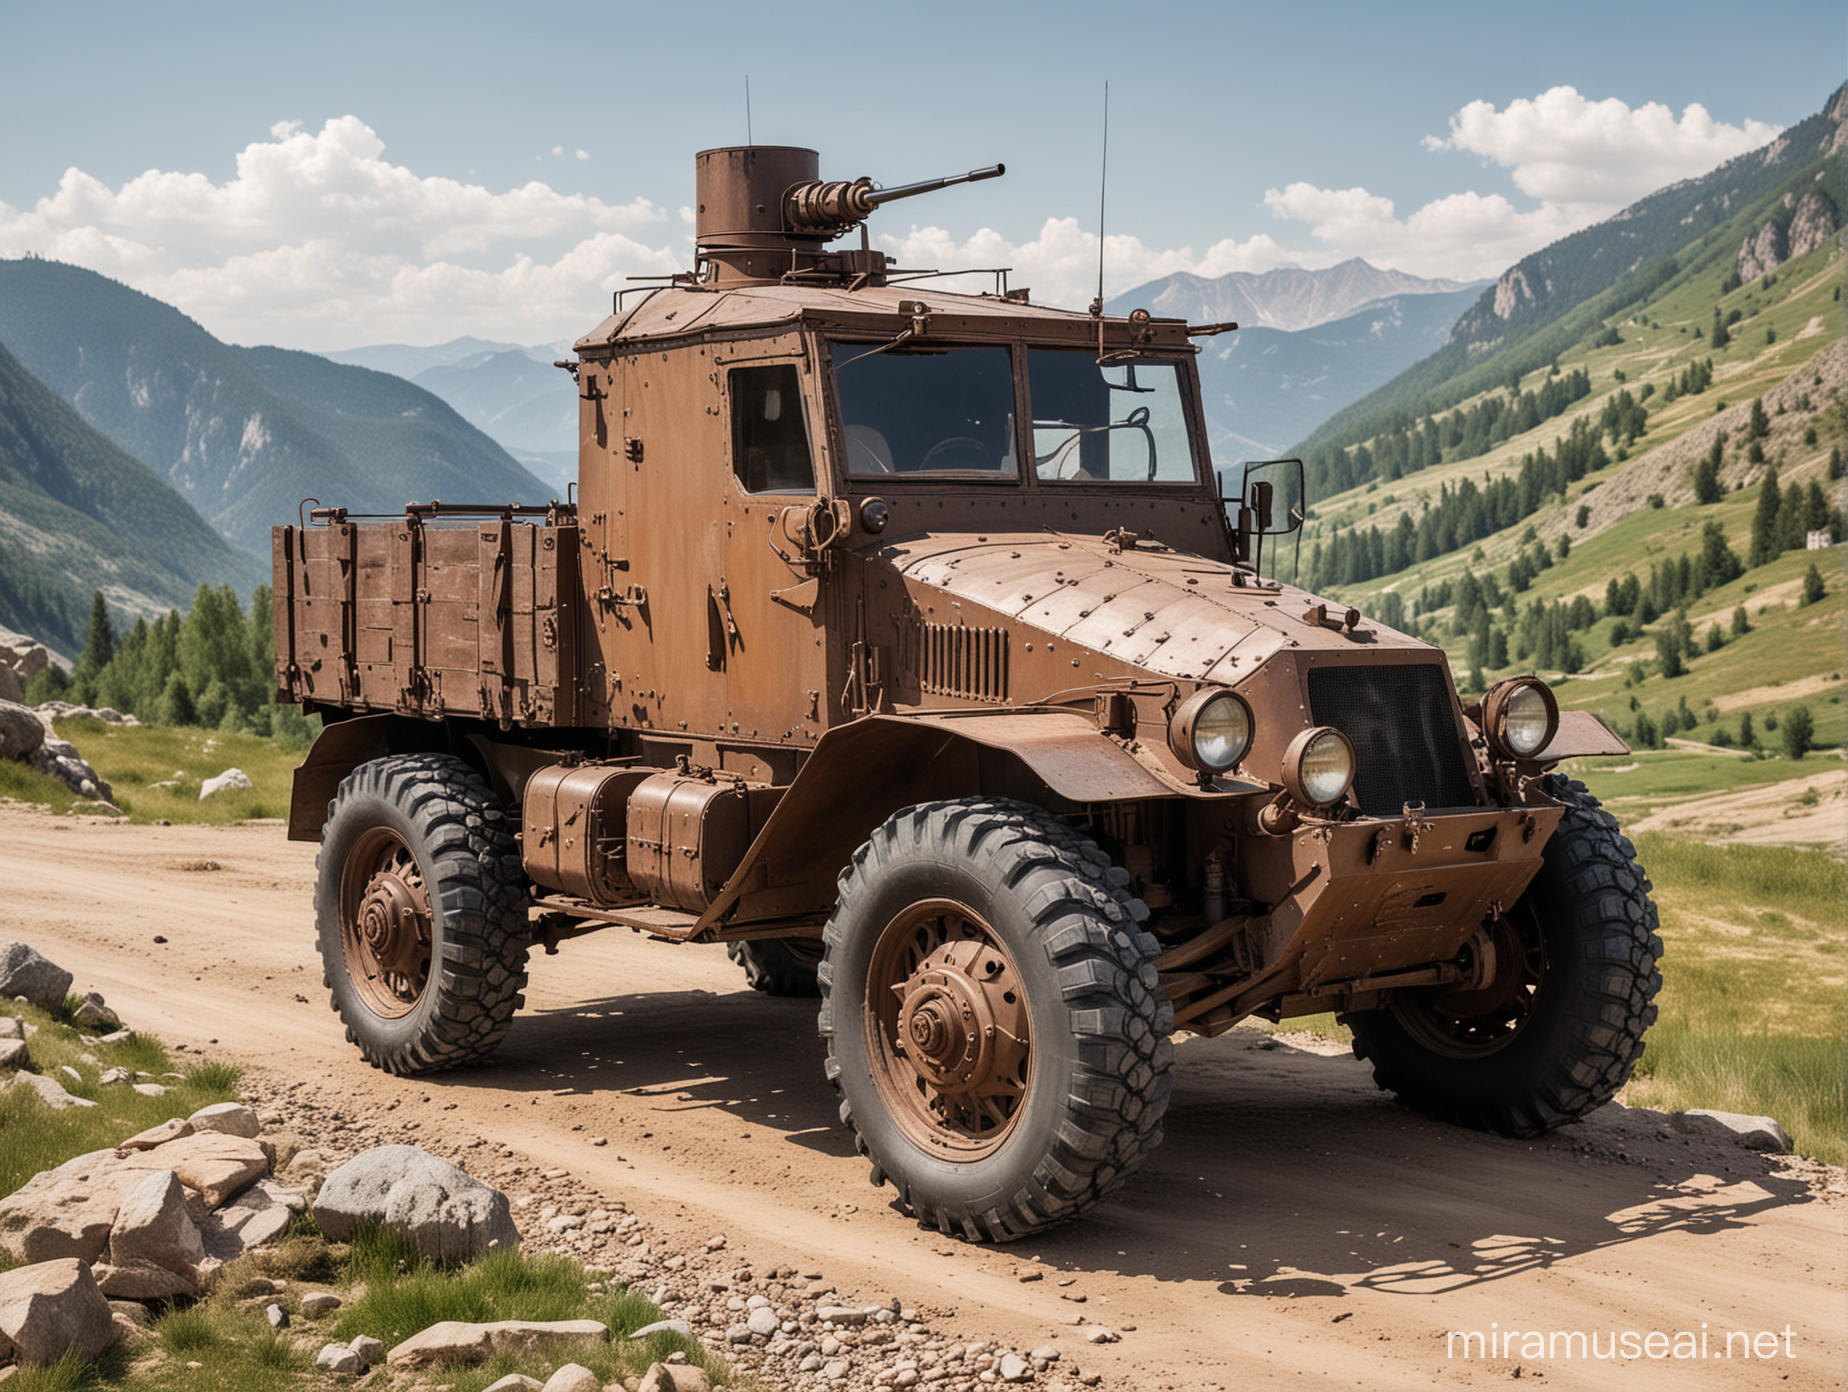 Vintage Armored War Car 1910 Mountain Terrain Expedition